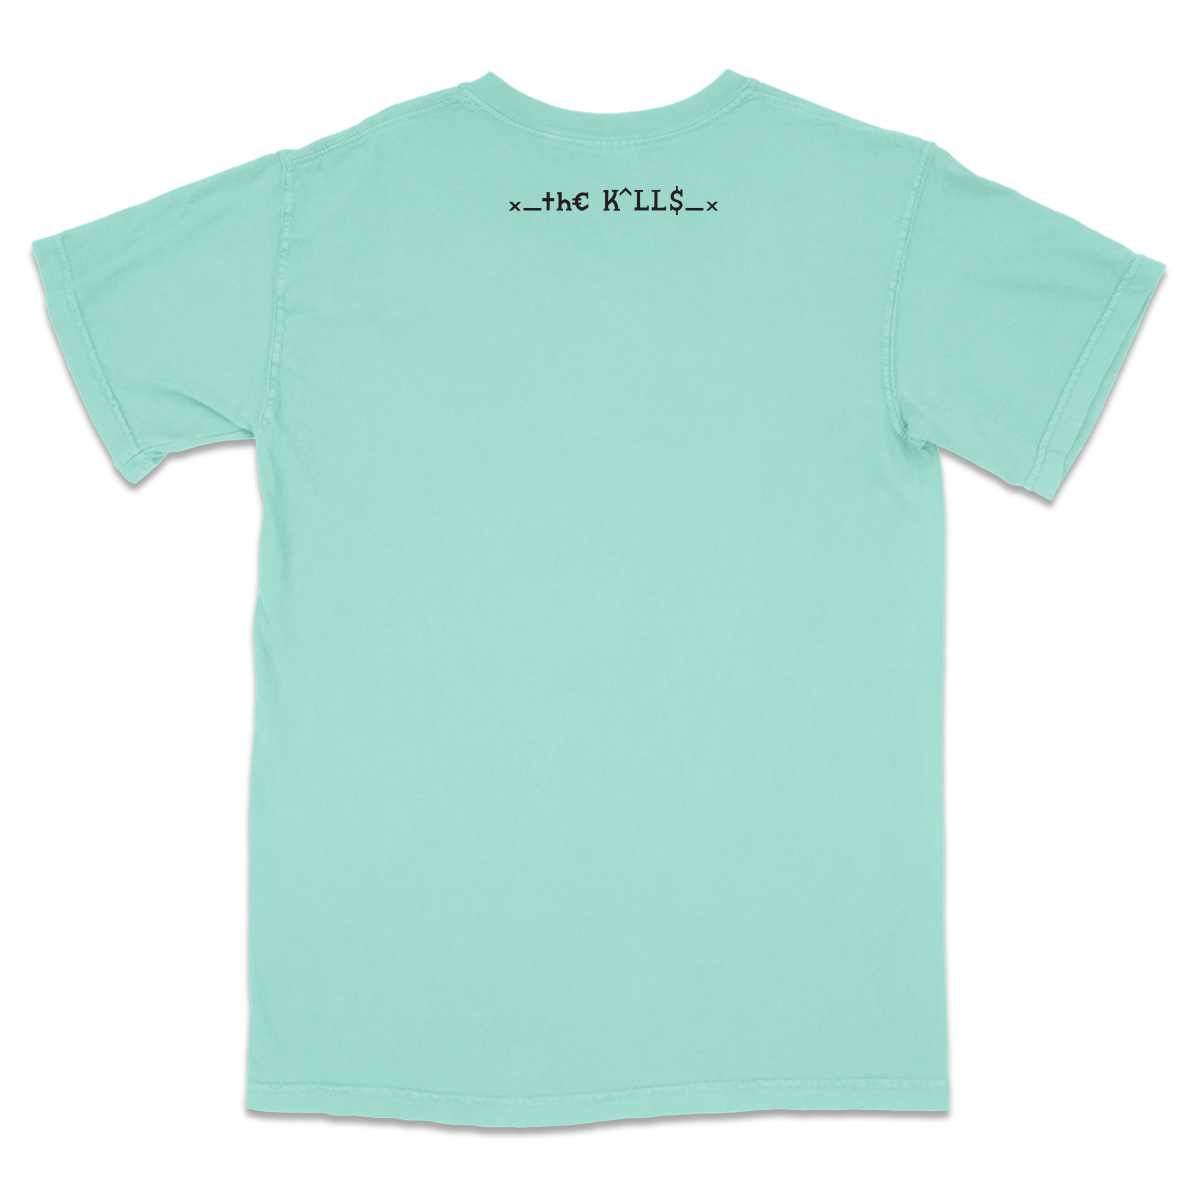 Limited Edition LA Hex Palms Chalky Mint T-shirt